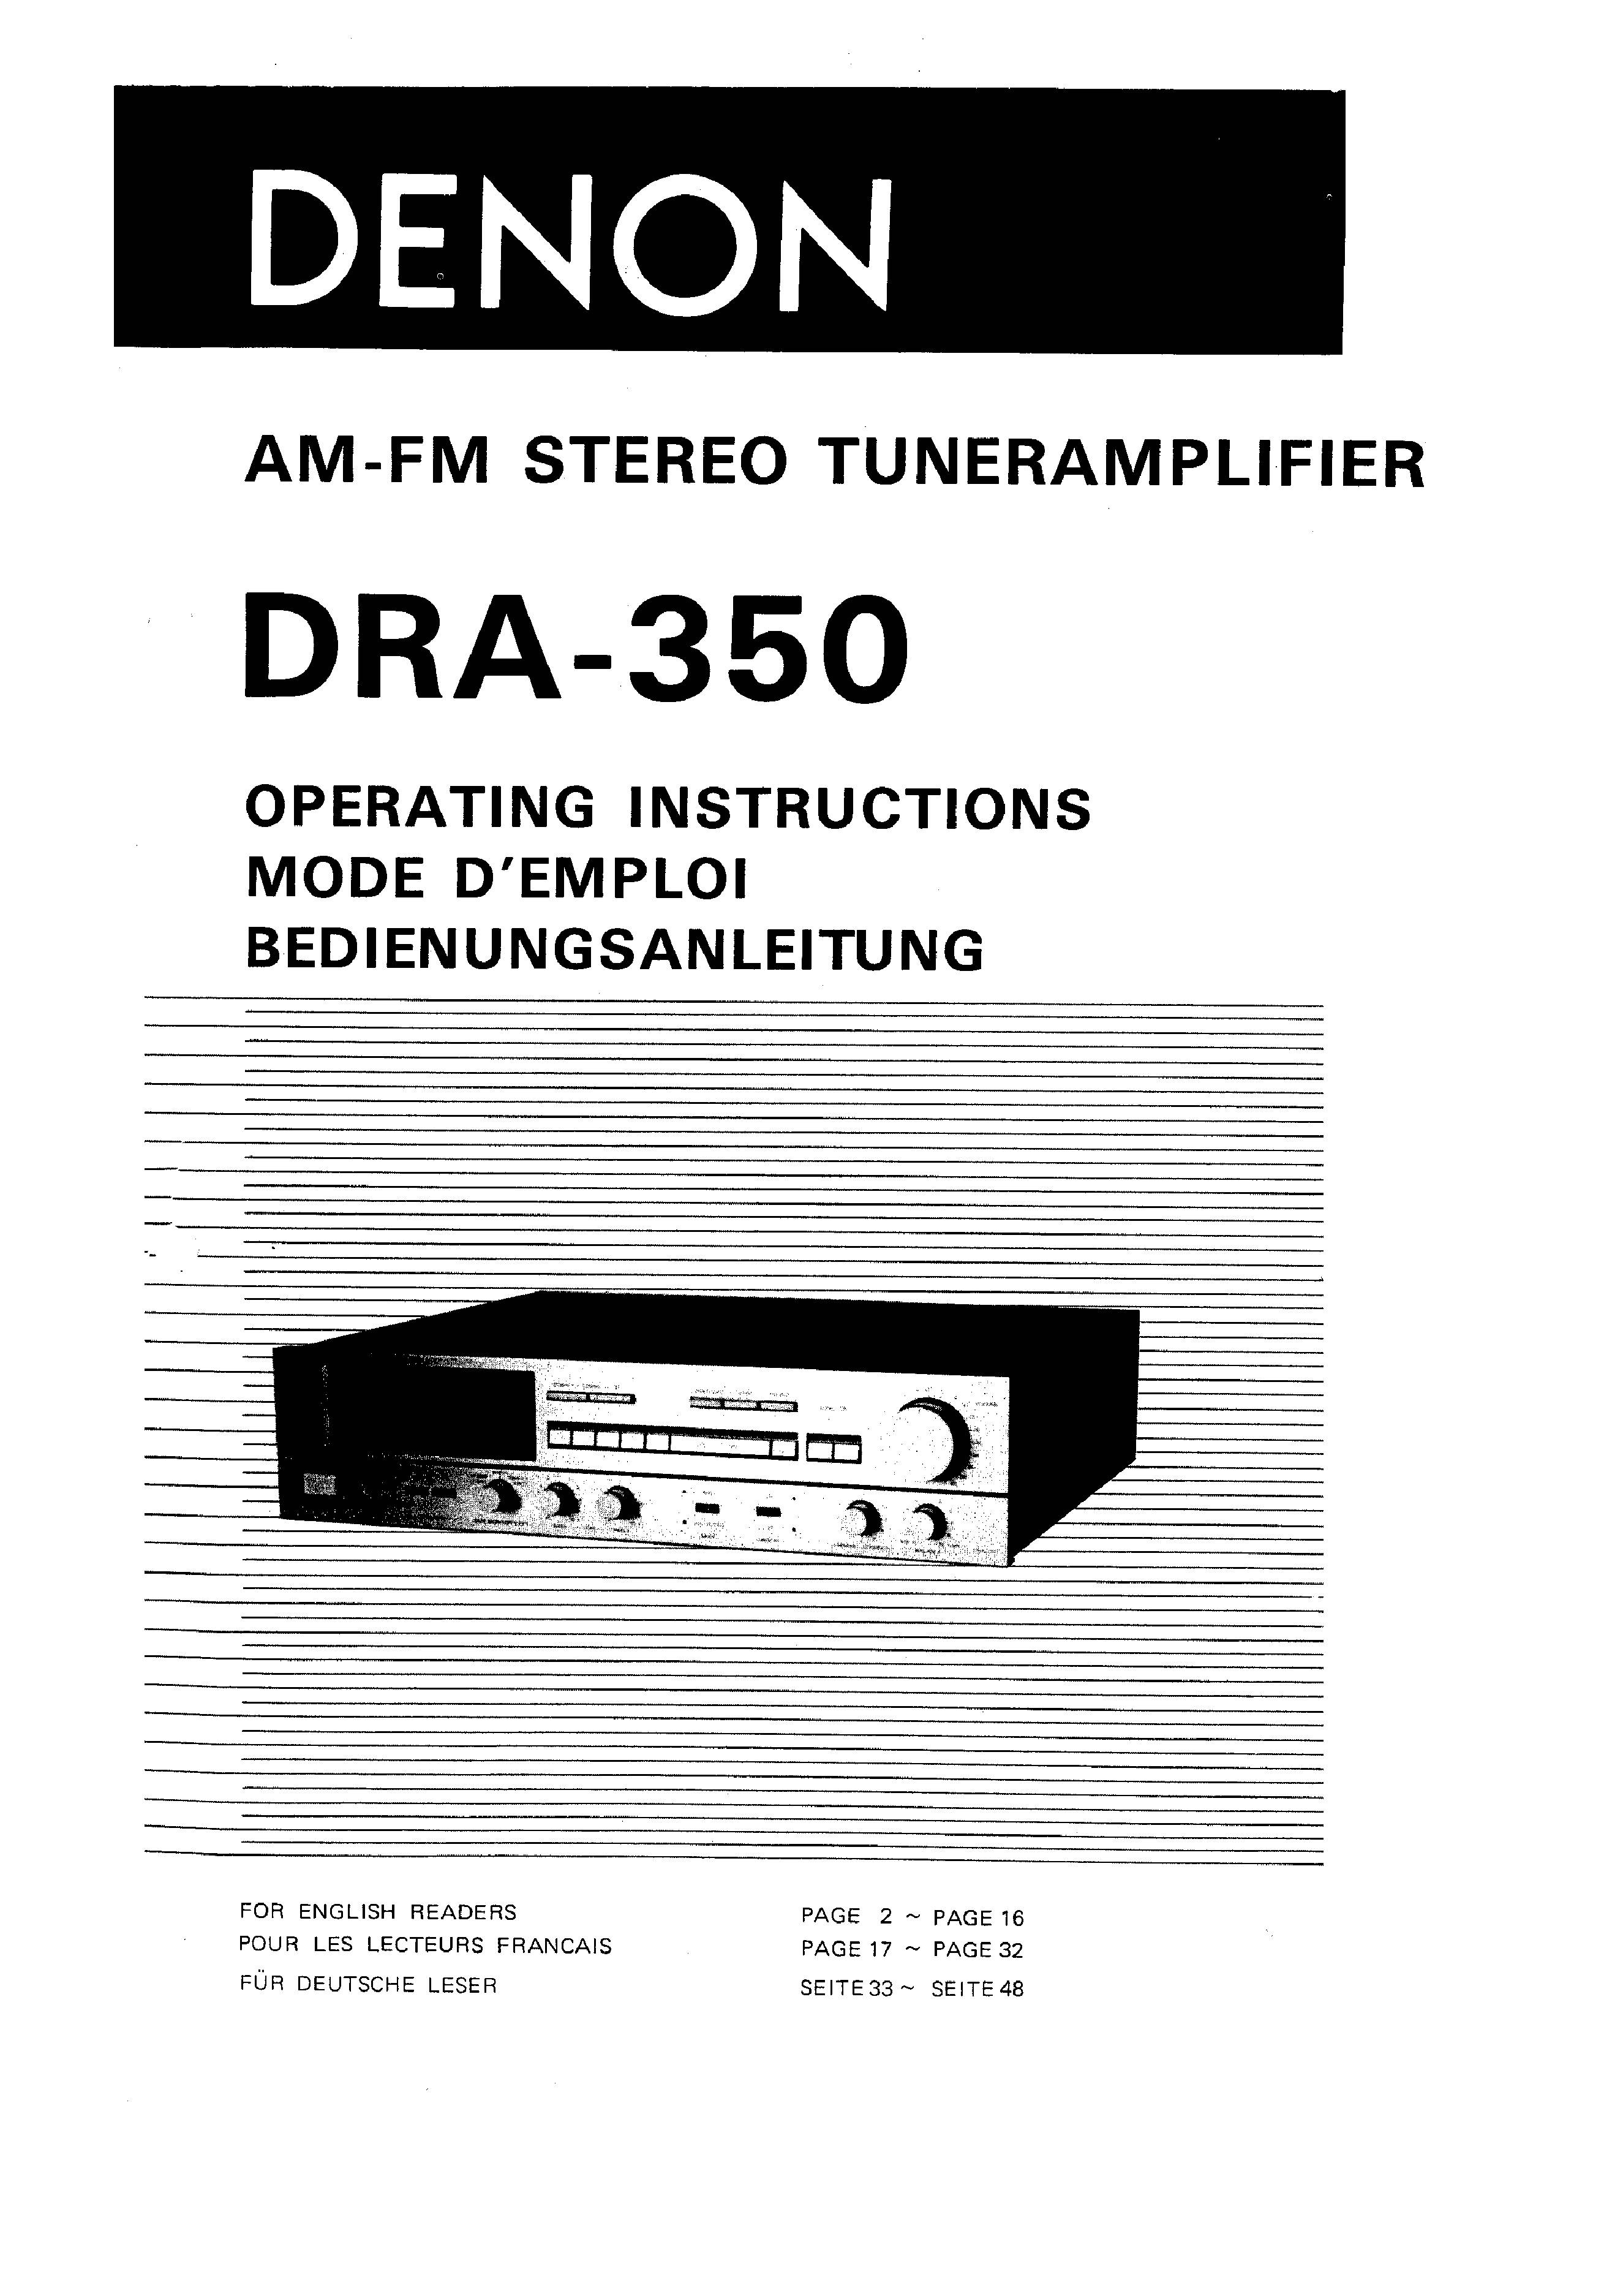 Denon DRA-350